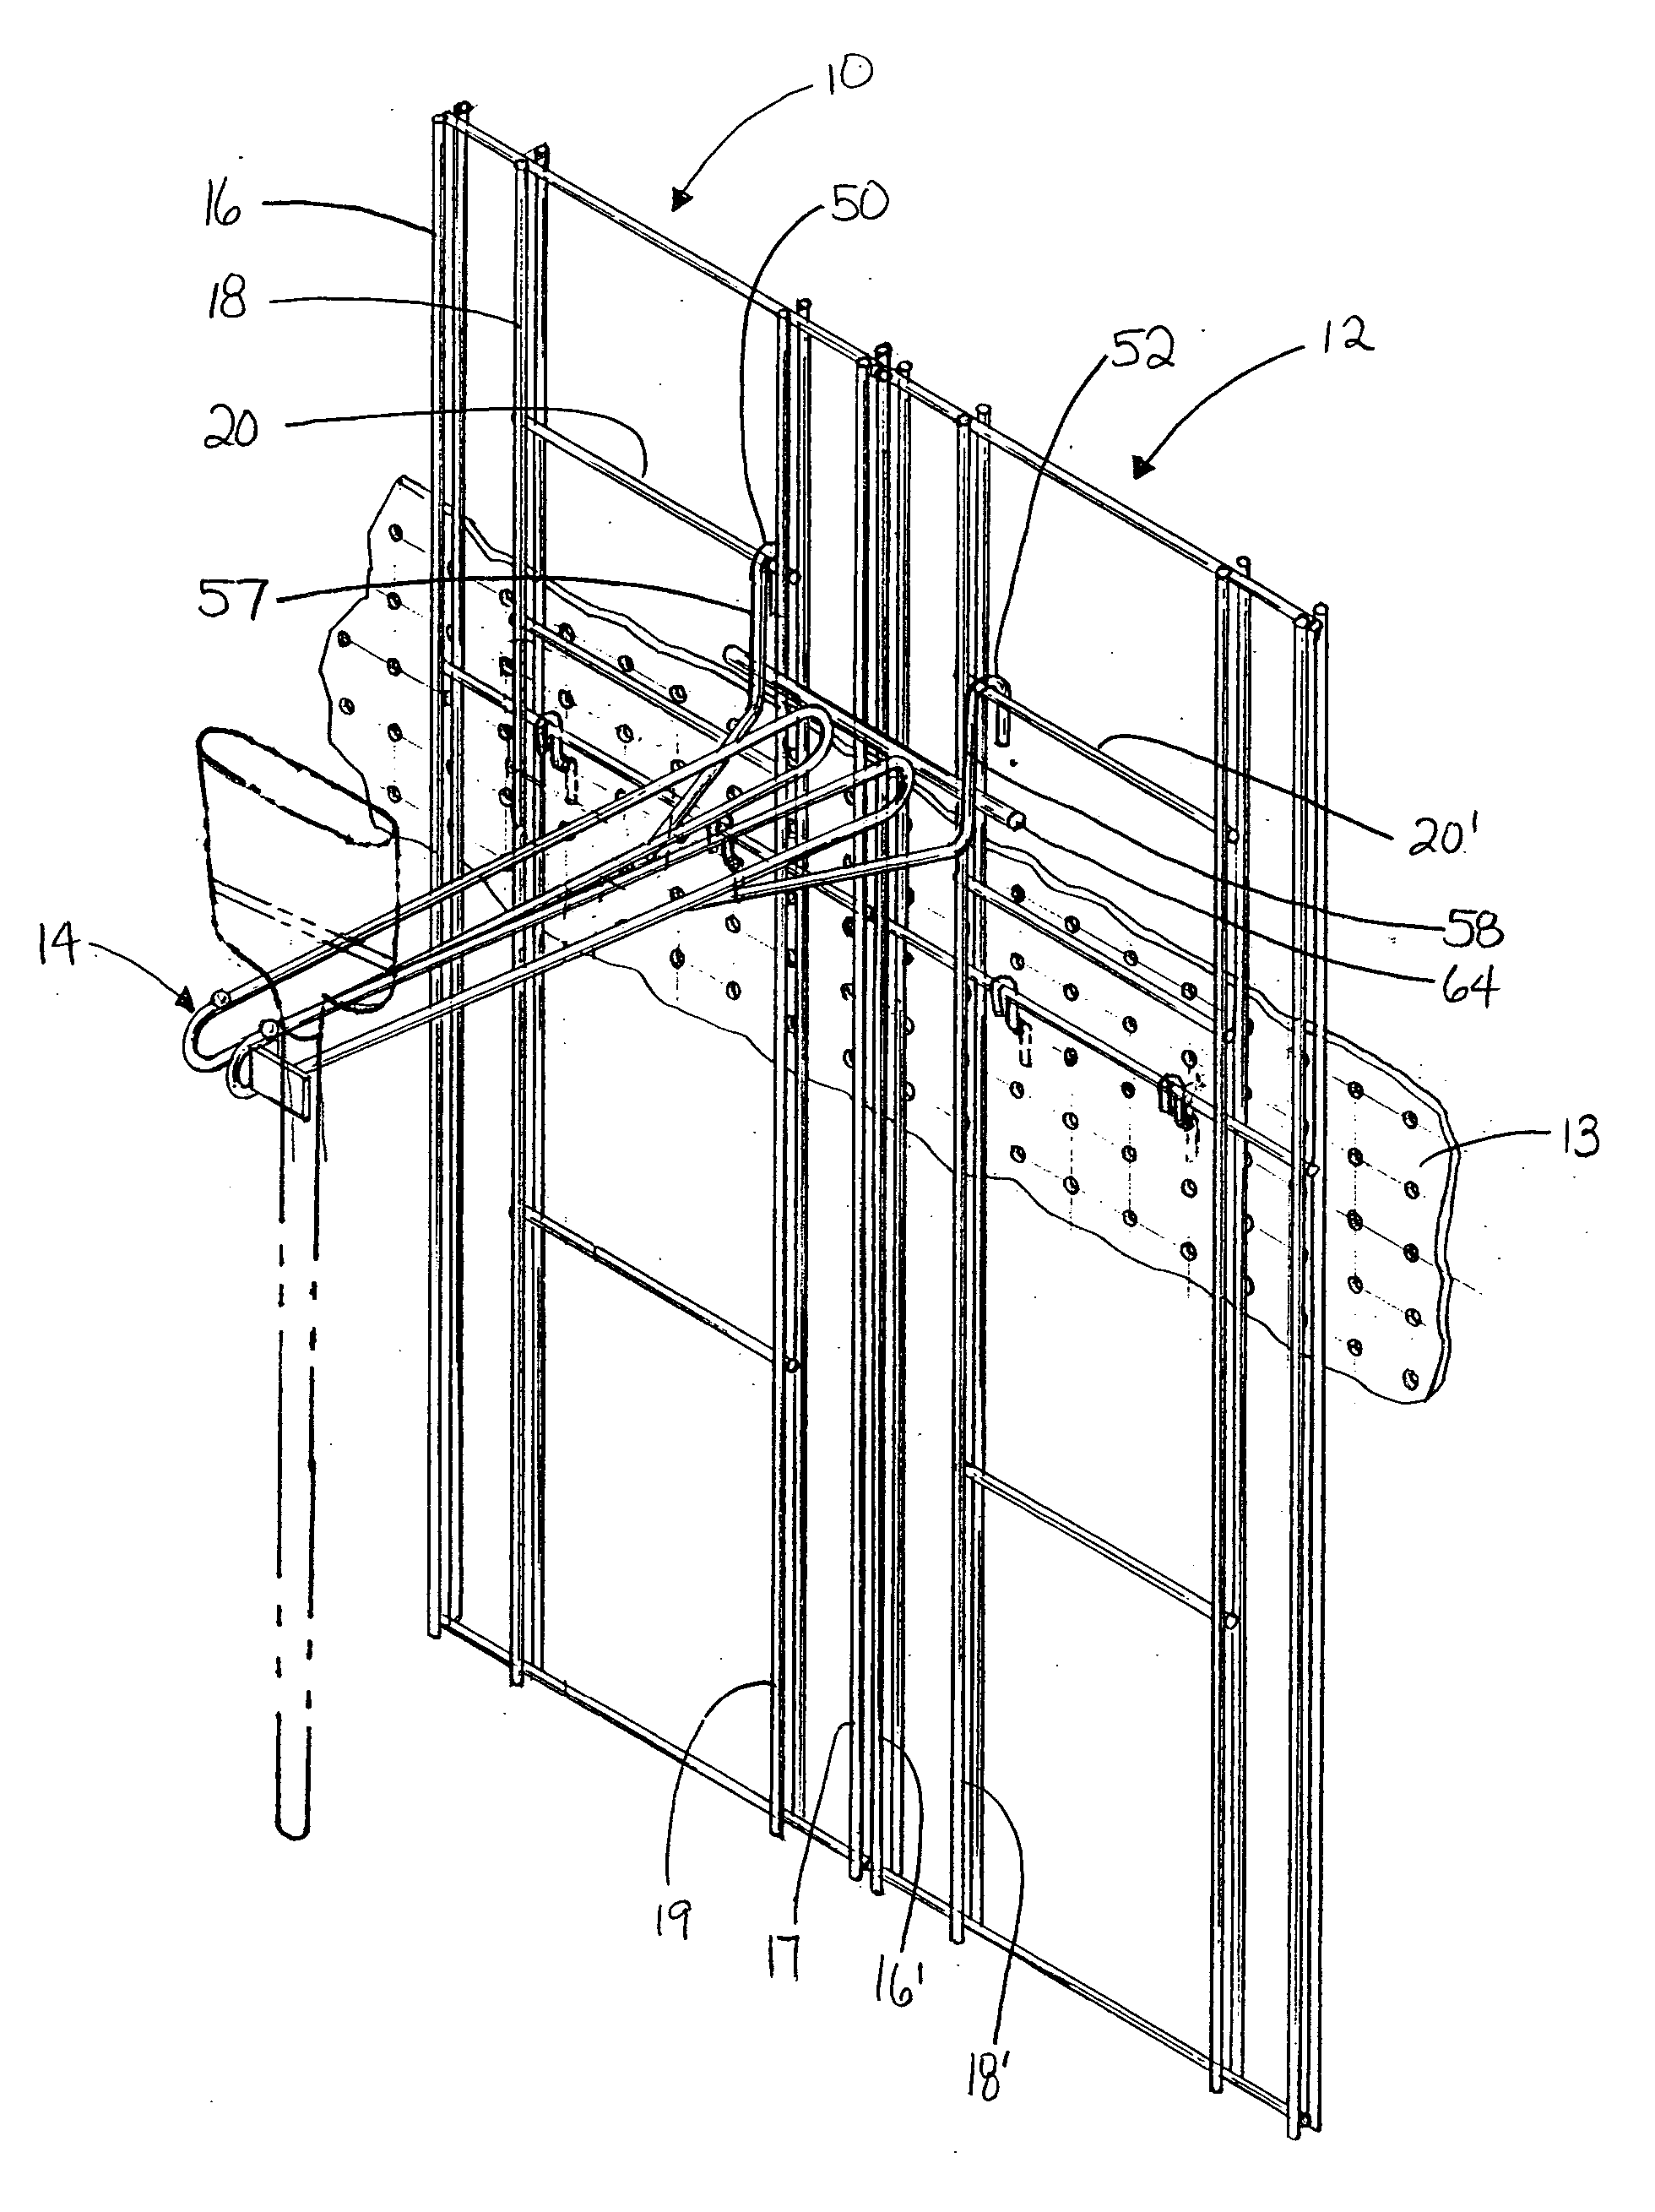 Display rack construction